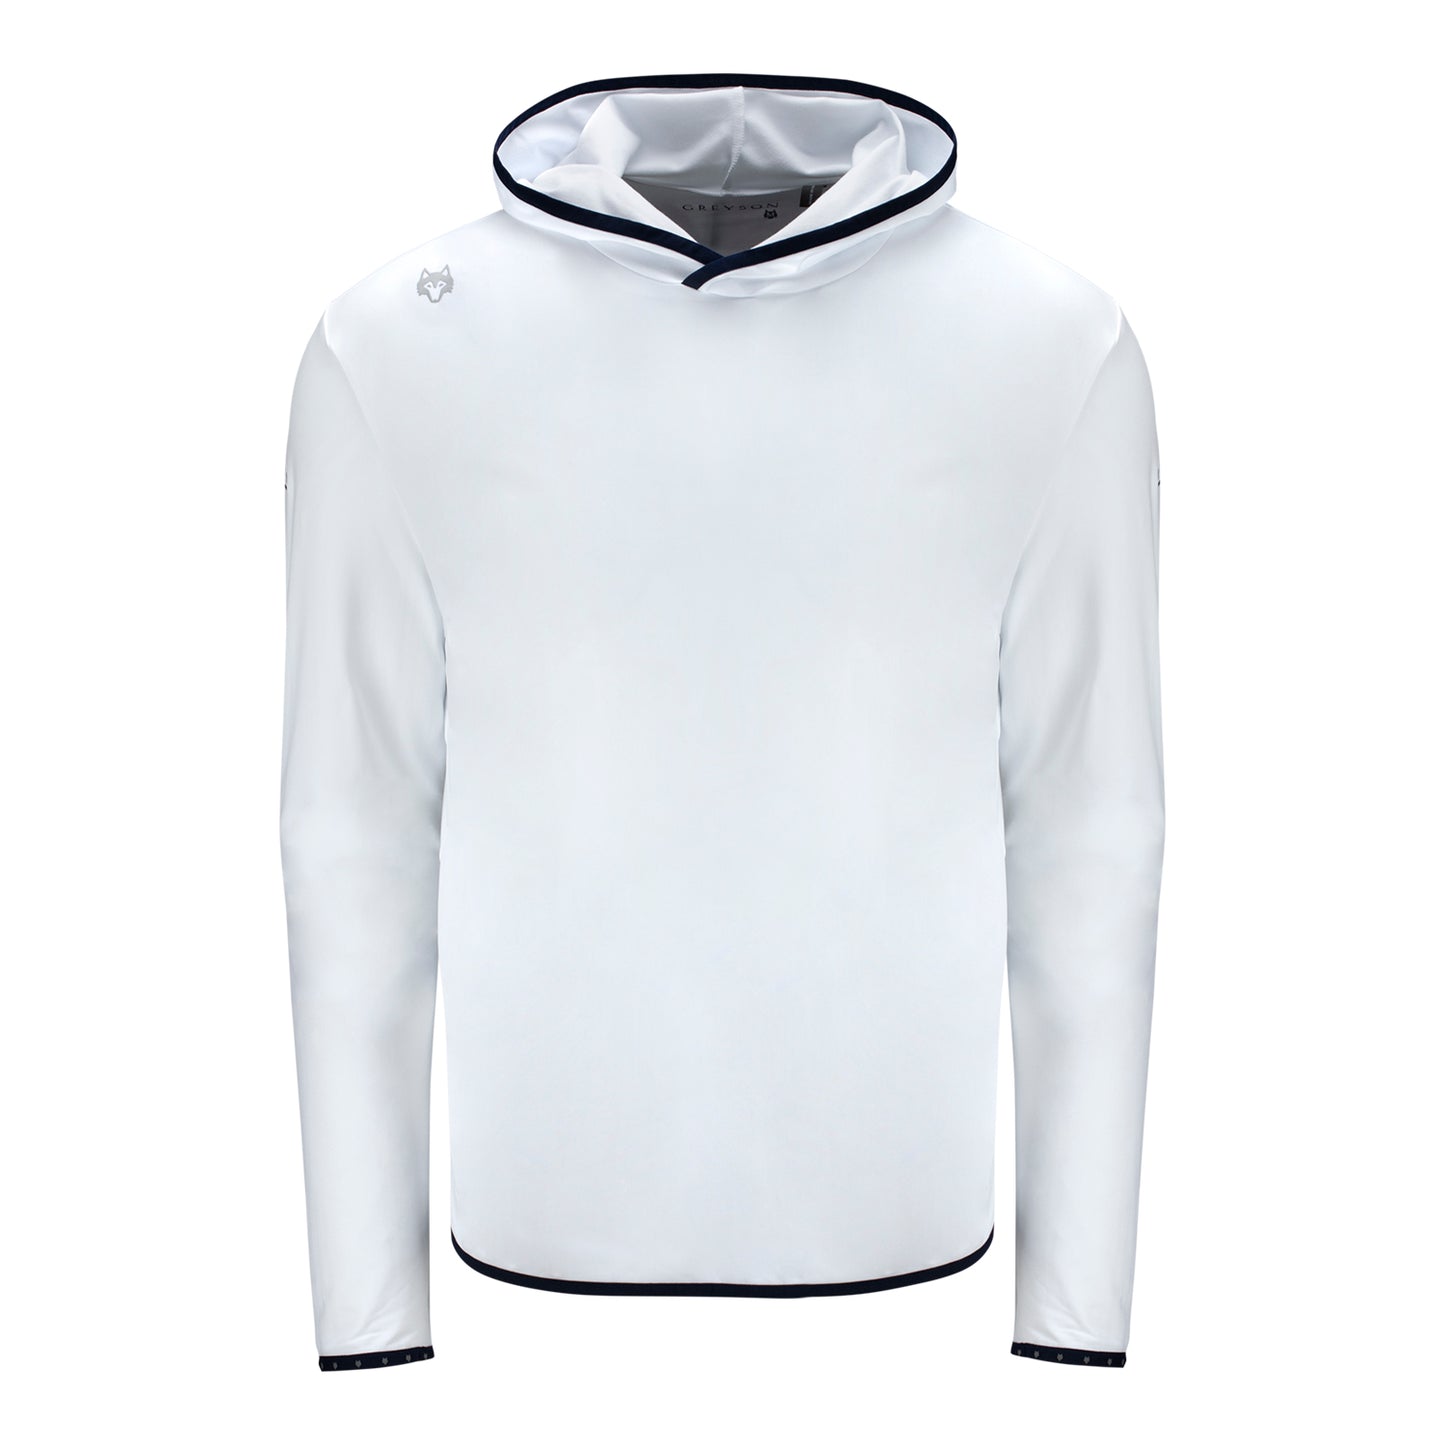 Greyson Clothiers LPGA Men's Colorado Golf Hoodie in White - Front View